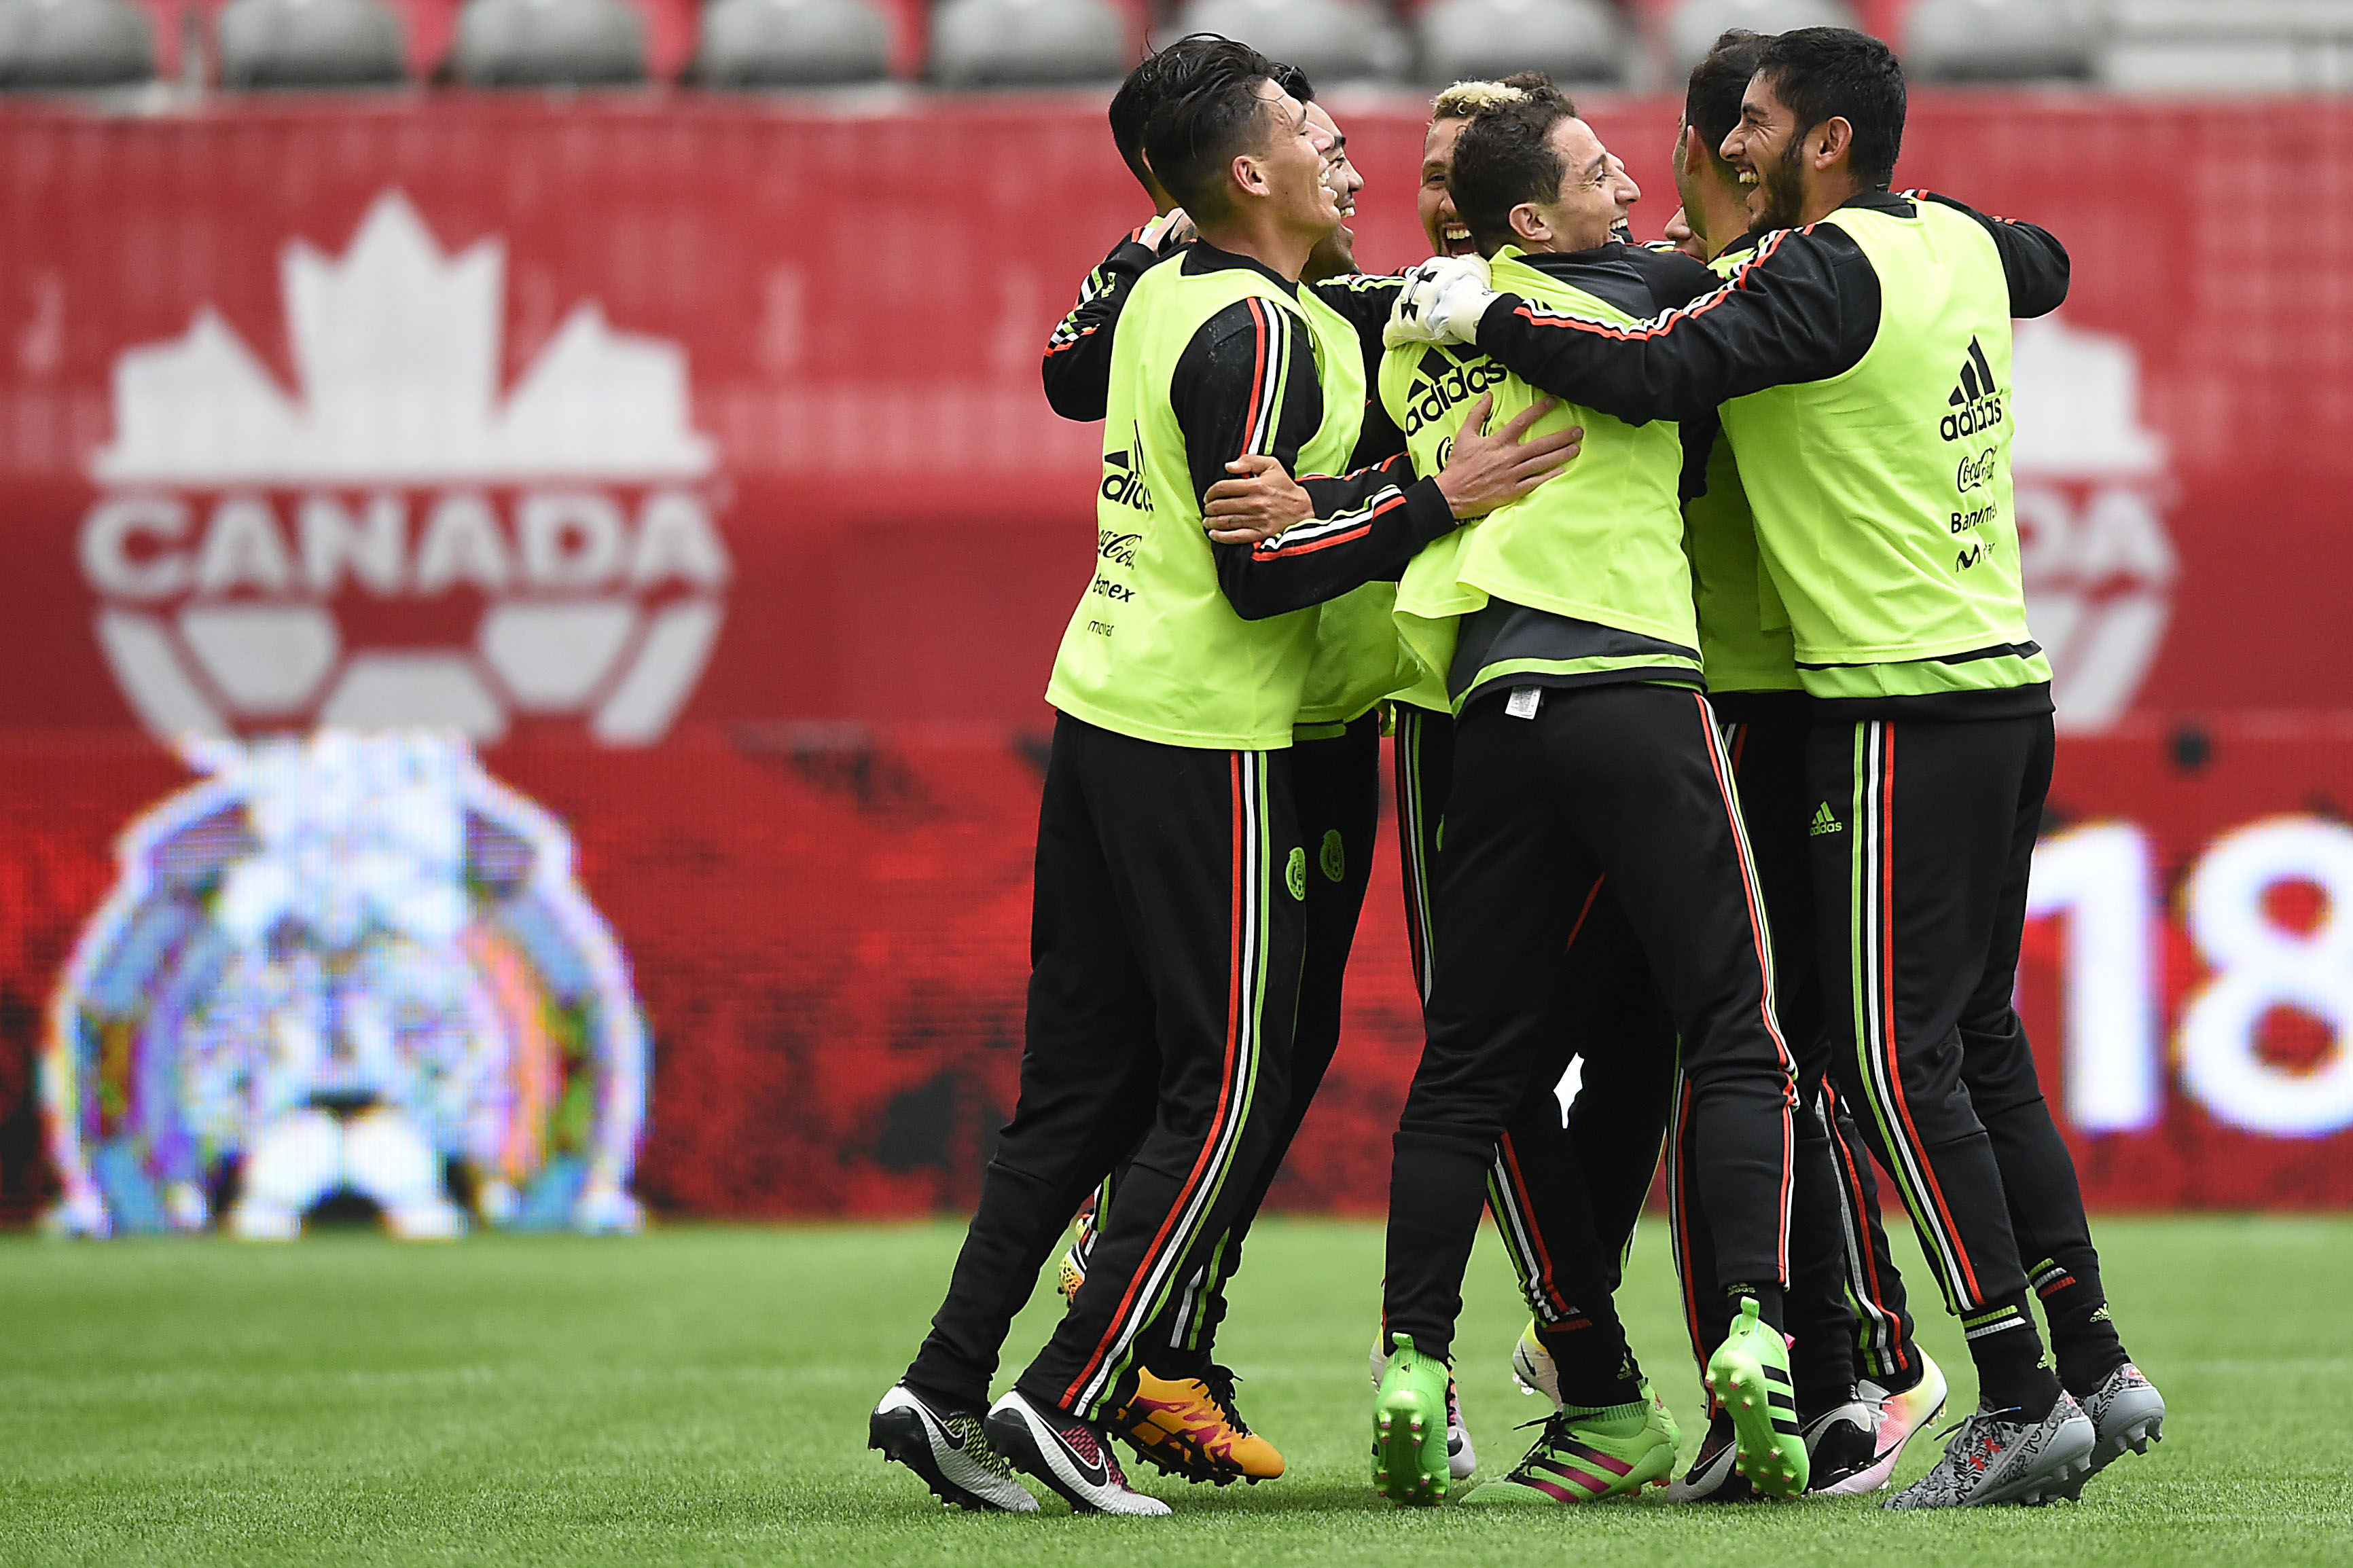 México se mide a Canadá en la Eliminatoria Mundialista